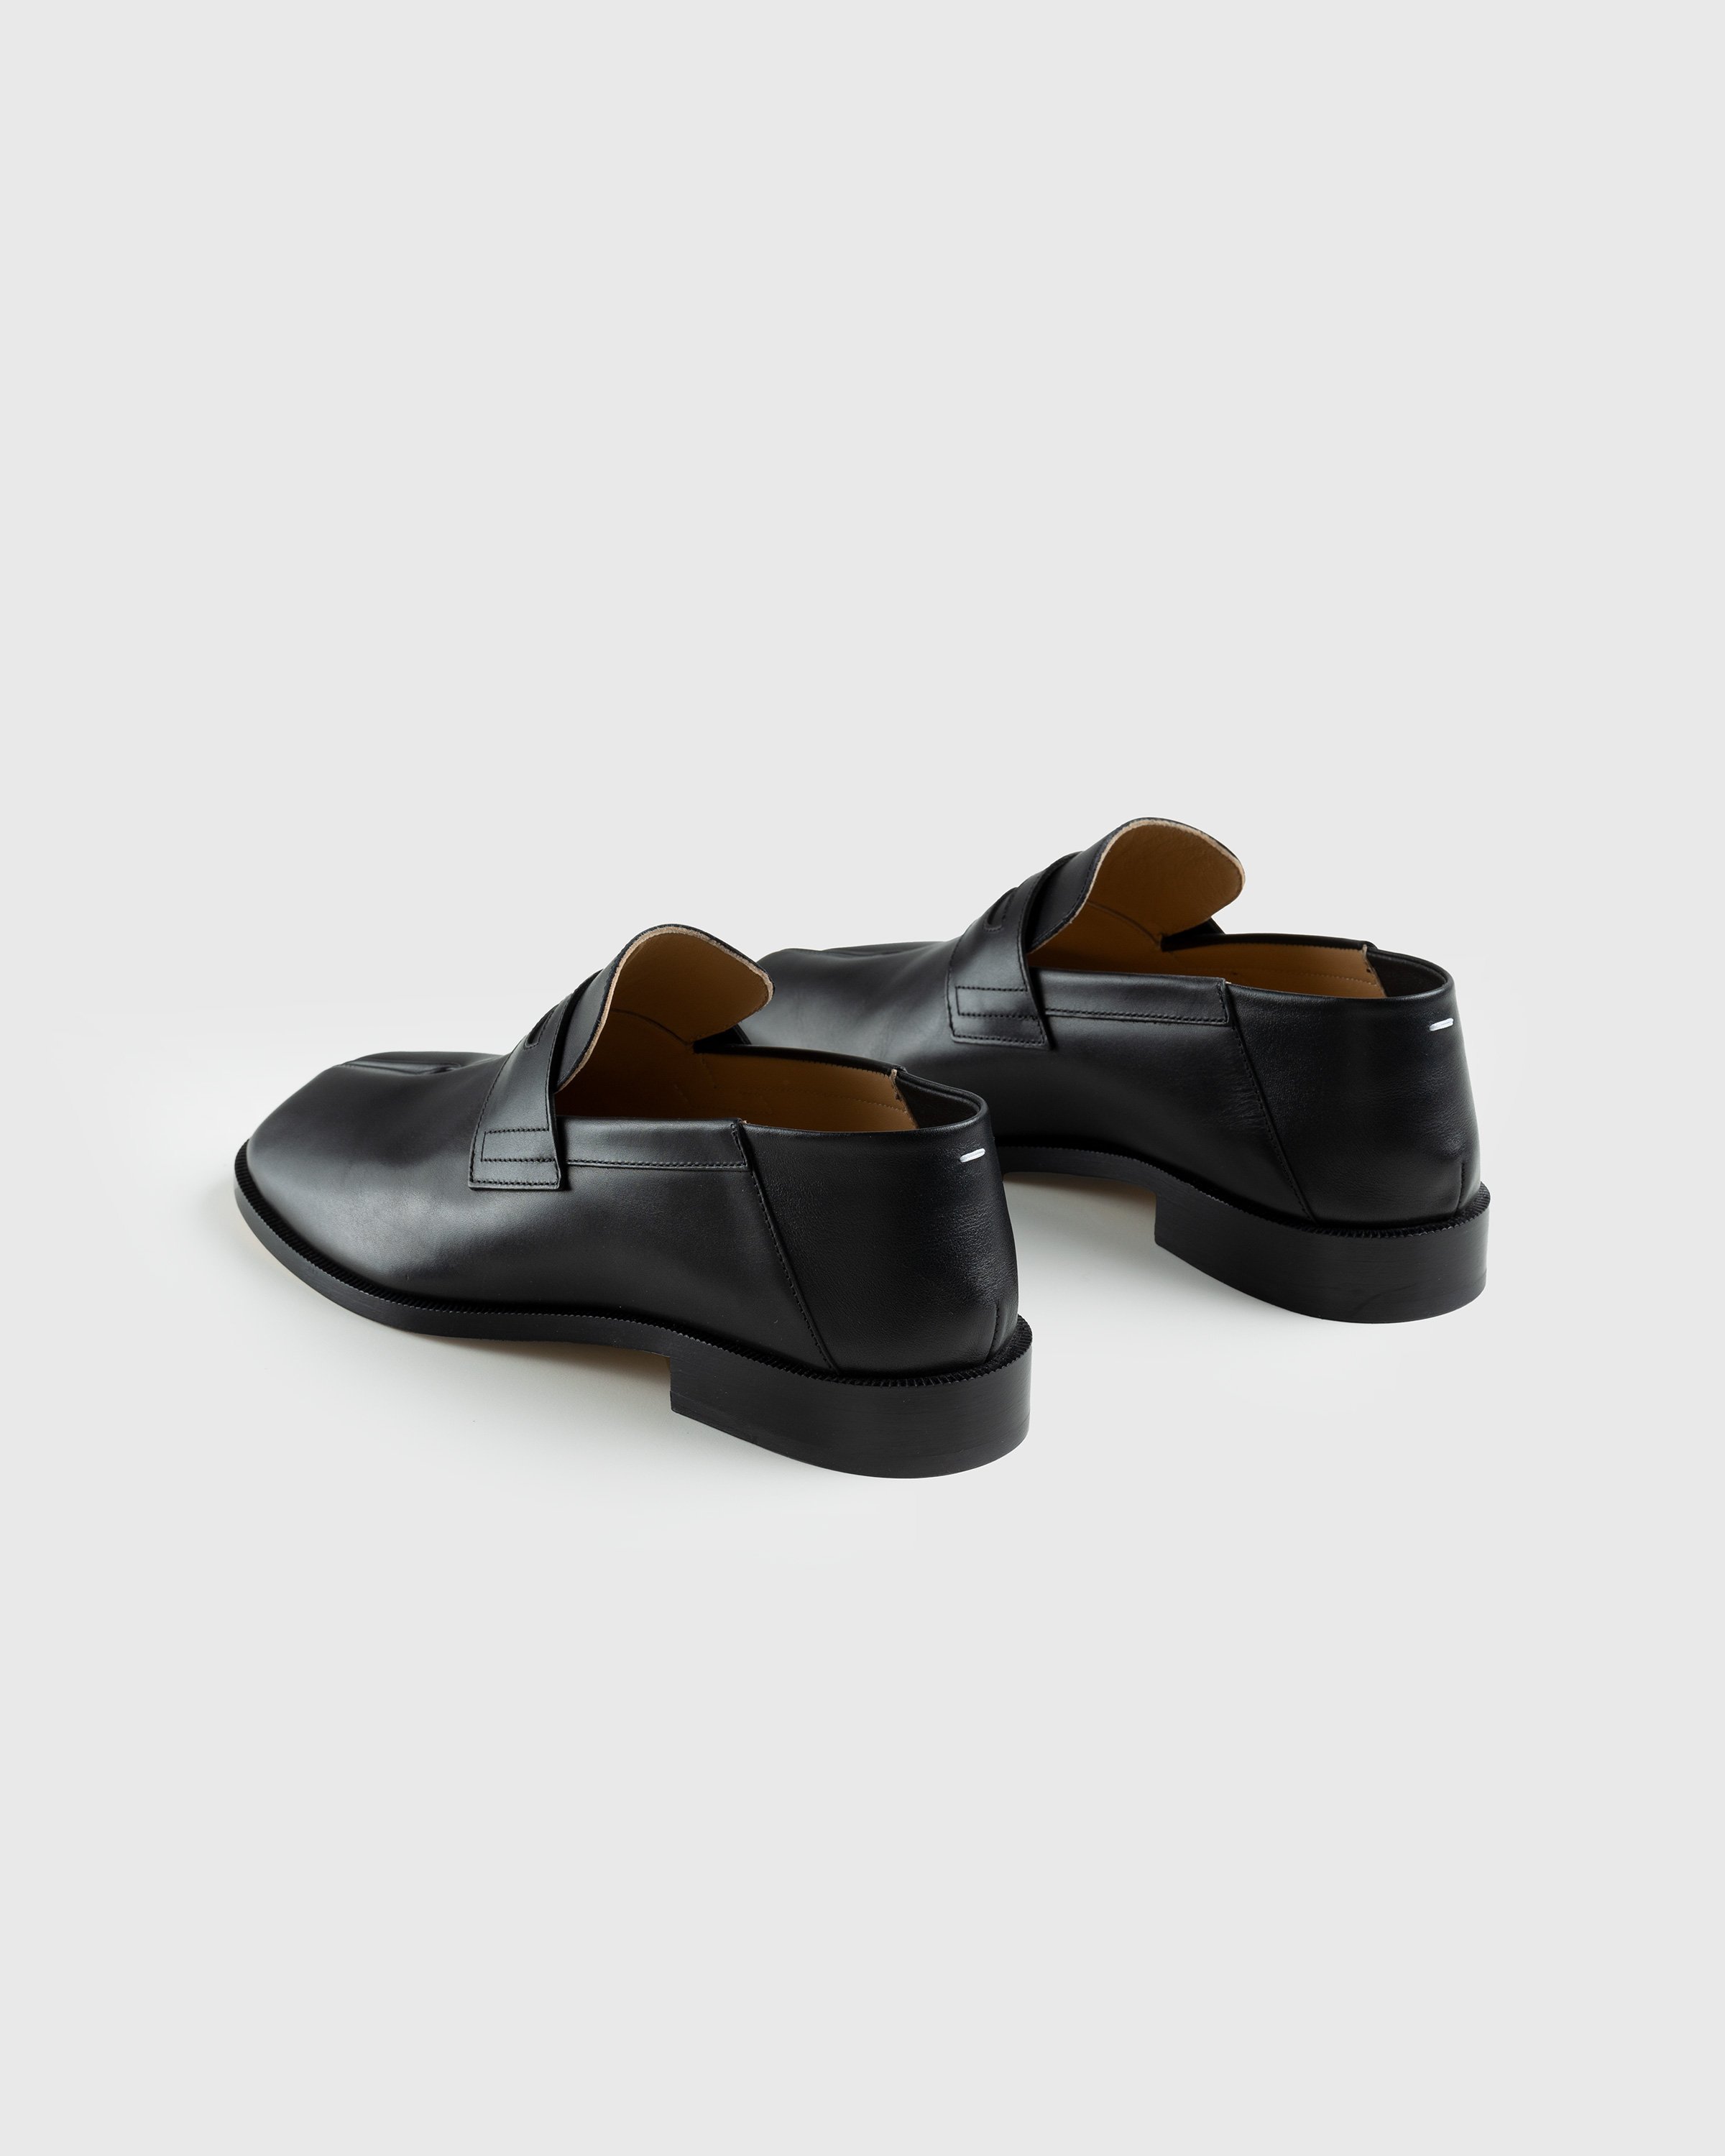 Maison Margiela - Tabi Loafer Babouche - Footwear - Black - Image 4